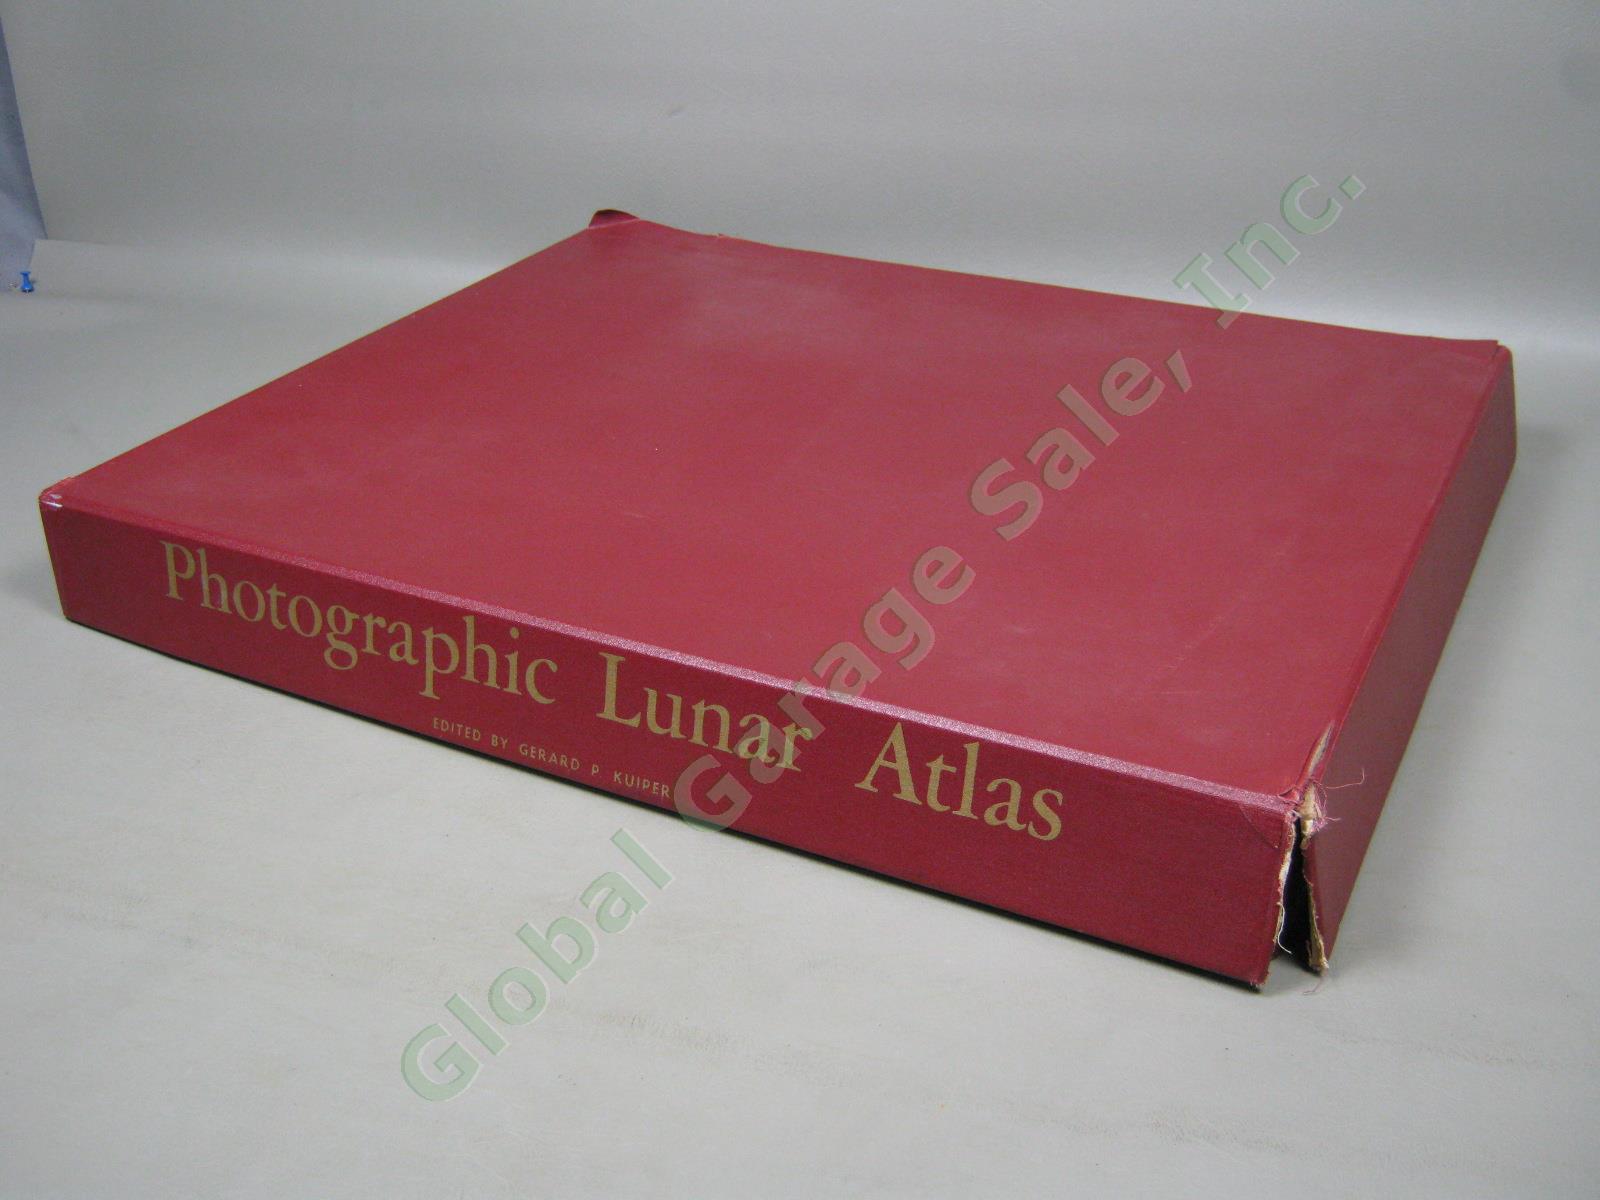 Vtg 1960 Photographic Lunar Atlas Elephant Folio W/Box + Booklet Gerard P Kuiper 3